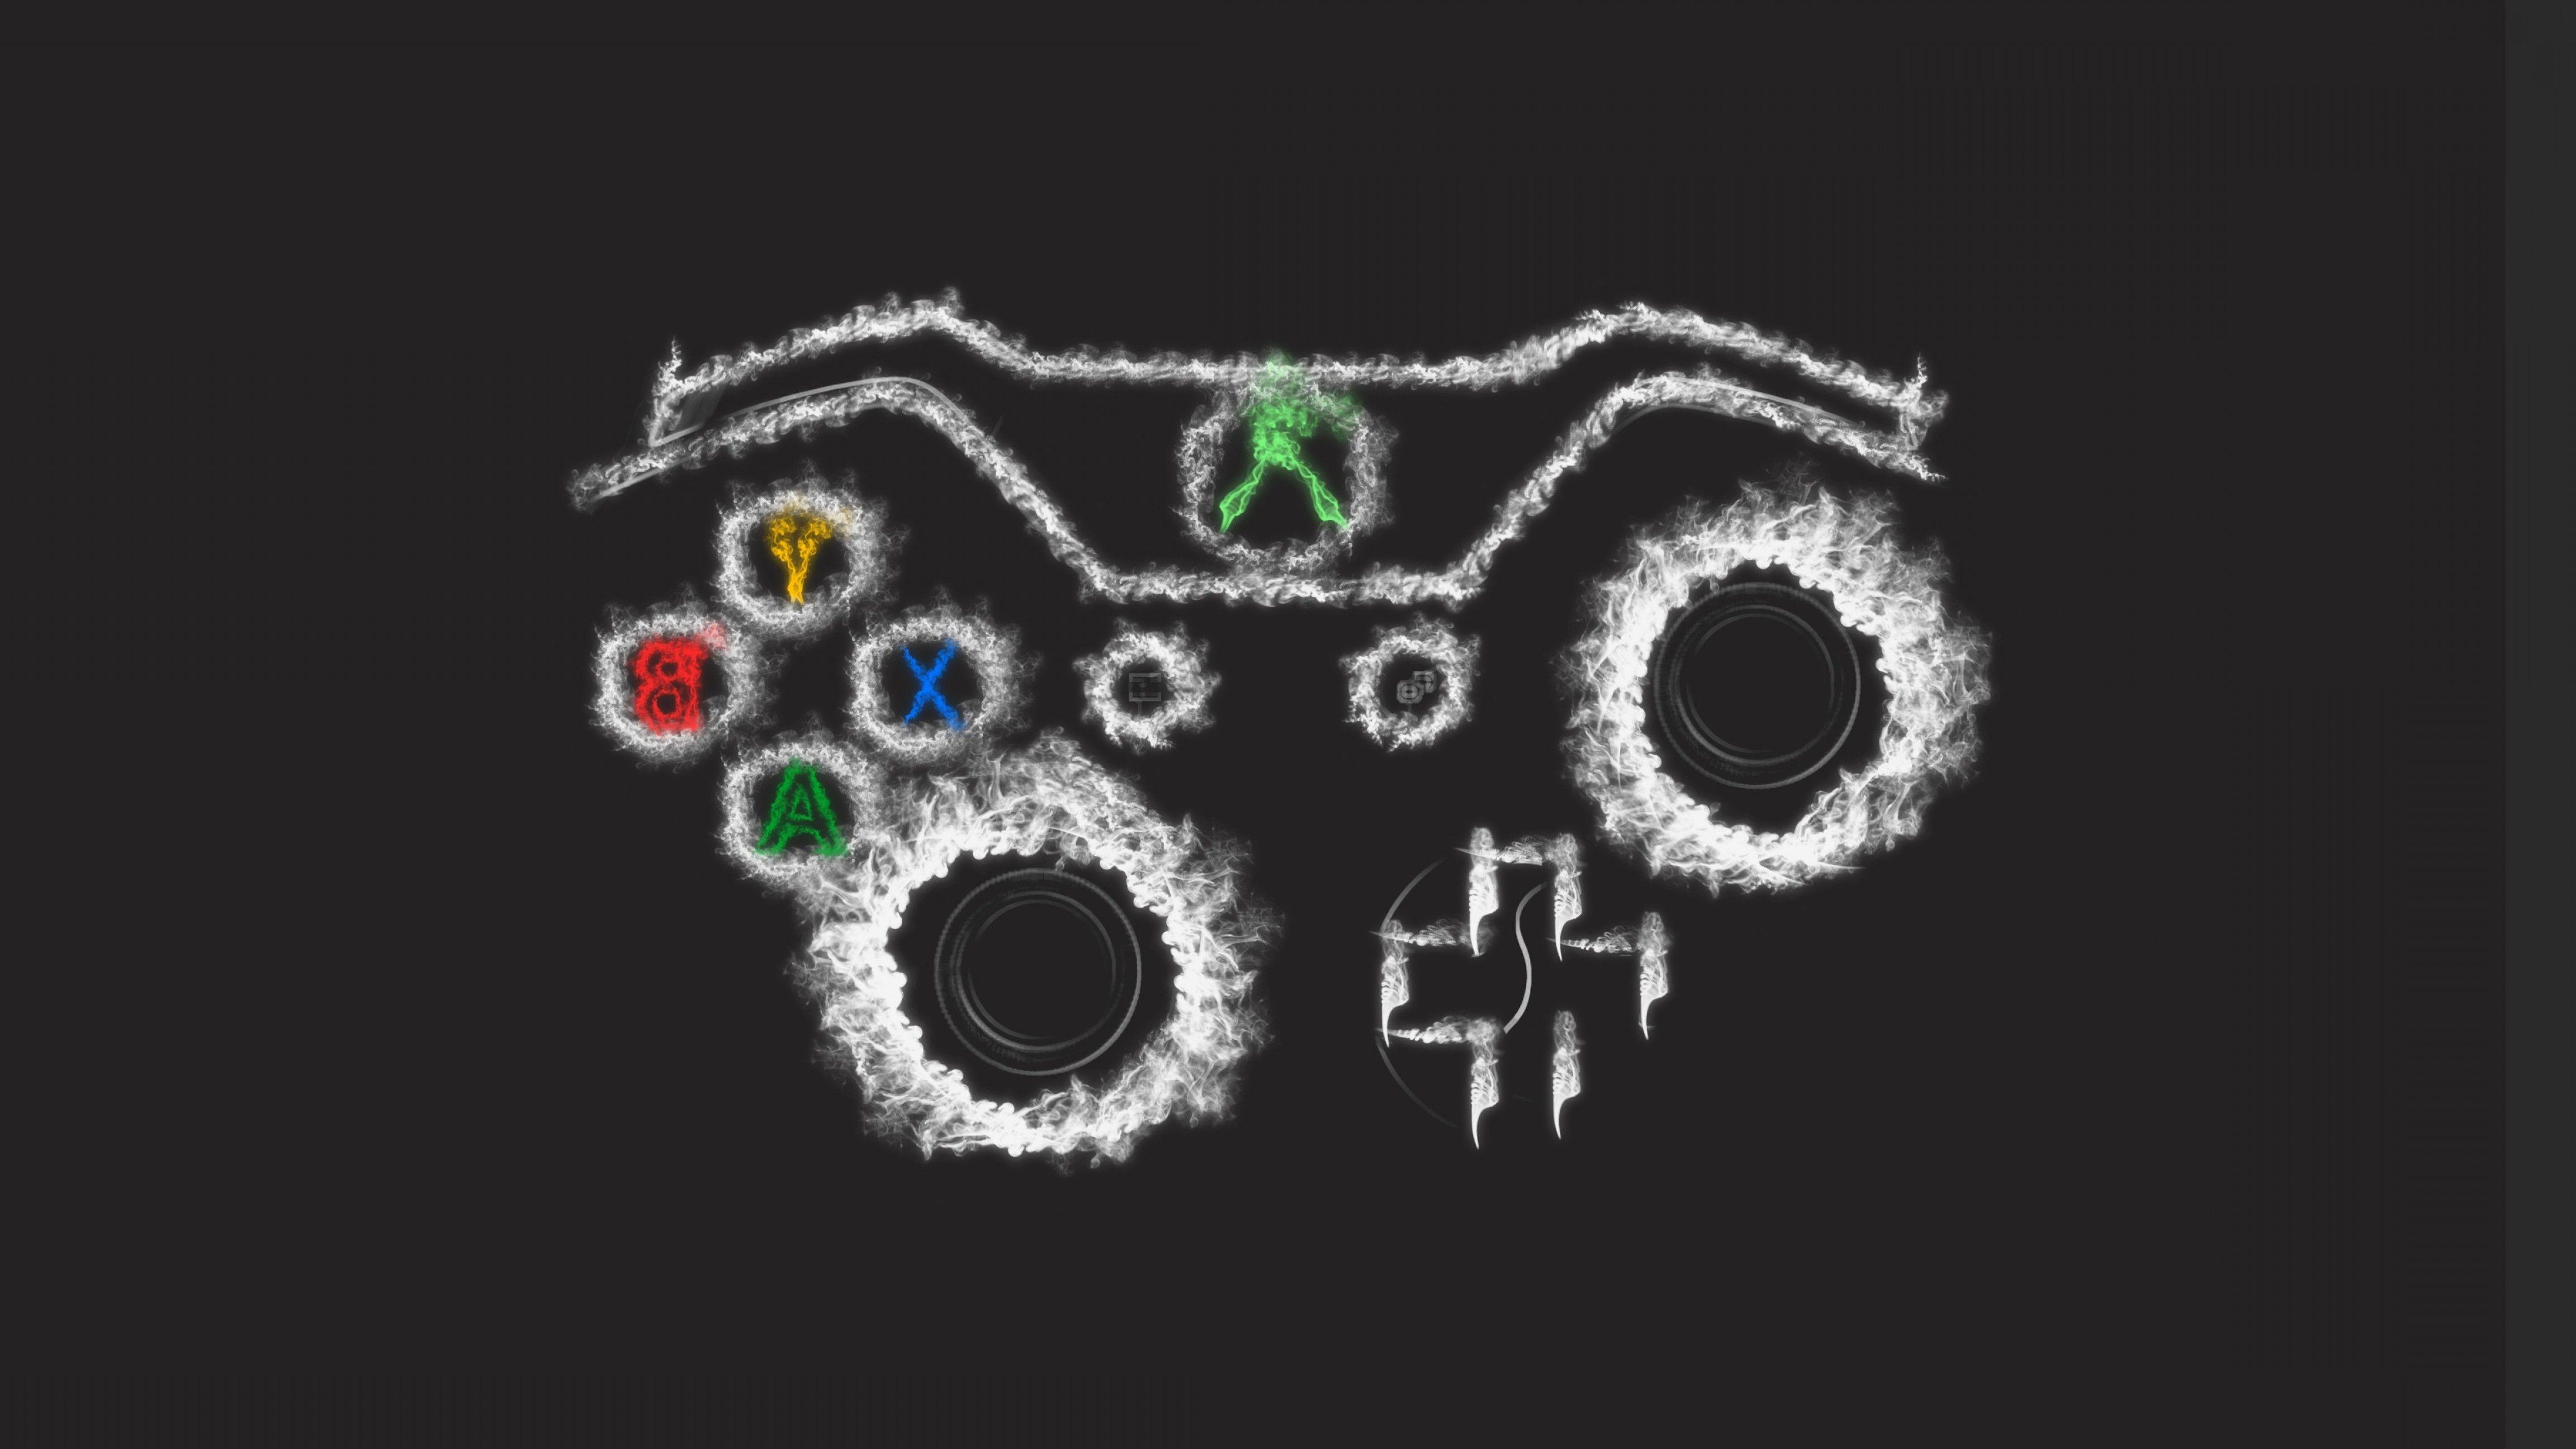 Controller Smoke Art Xbox One Wallpaper